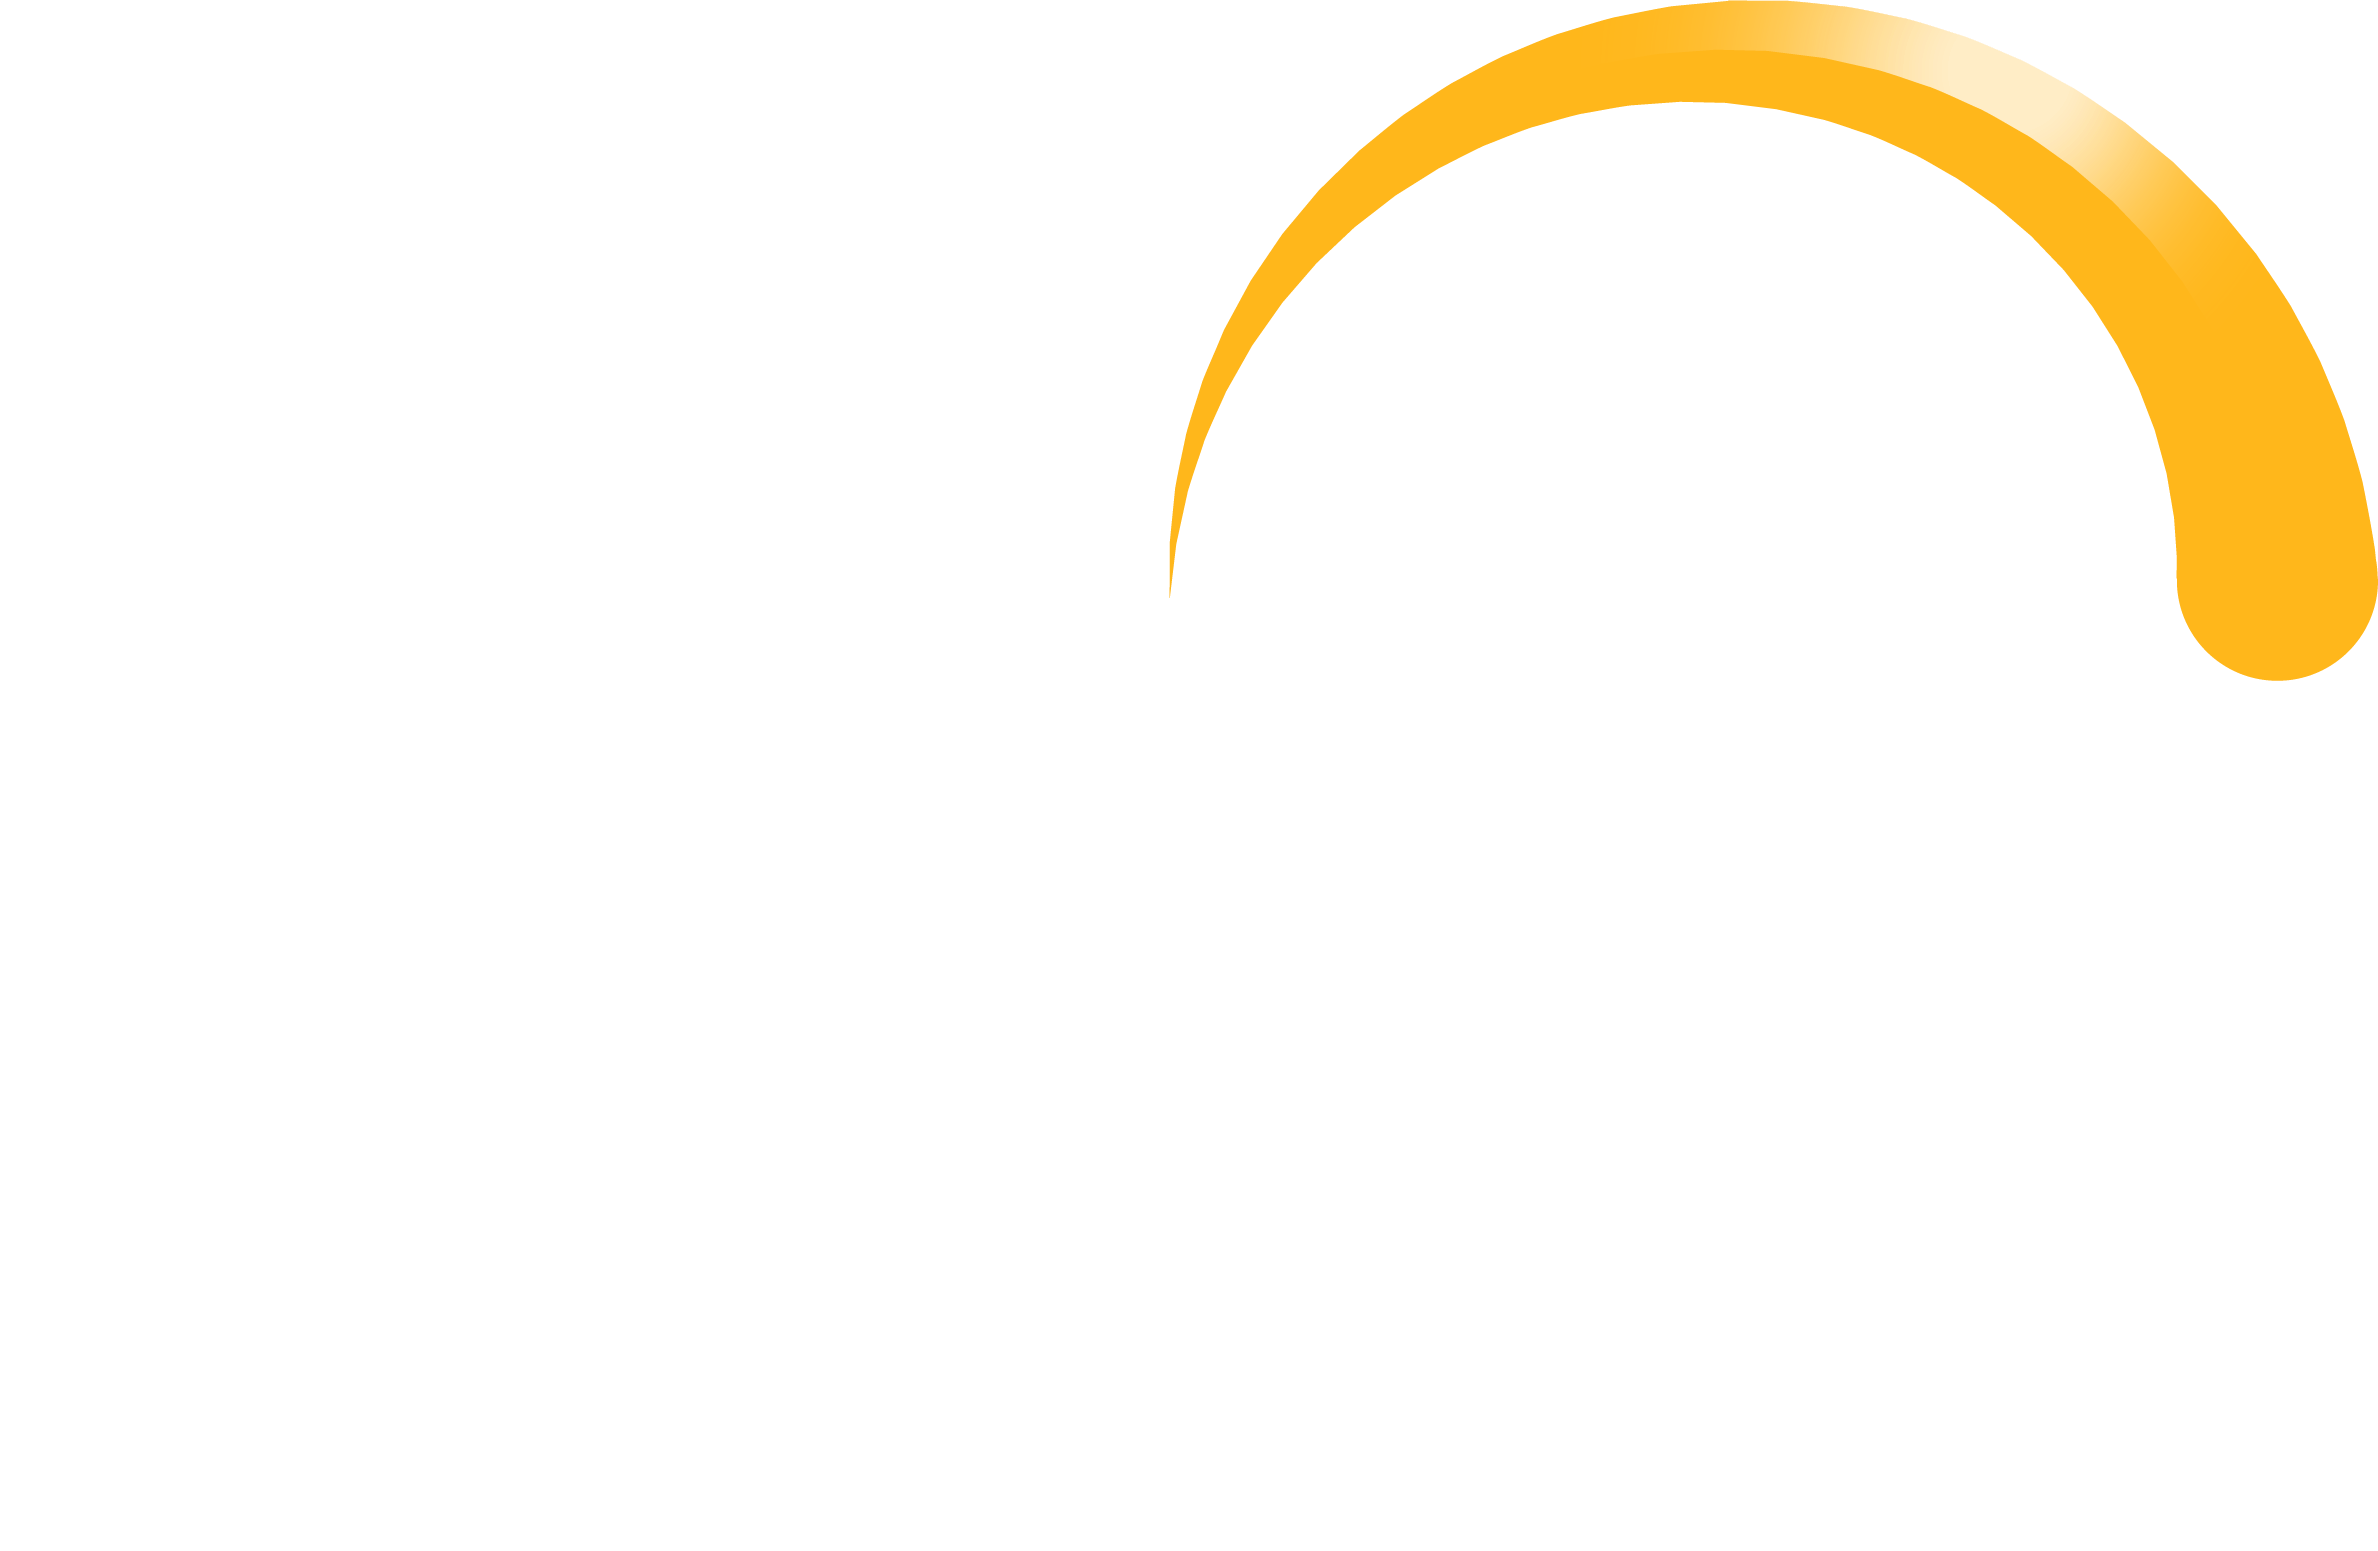 Aadi Bioscience logo large for dark backgrounds (transparent PNG)